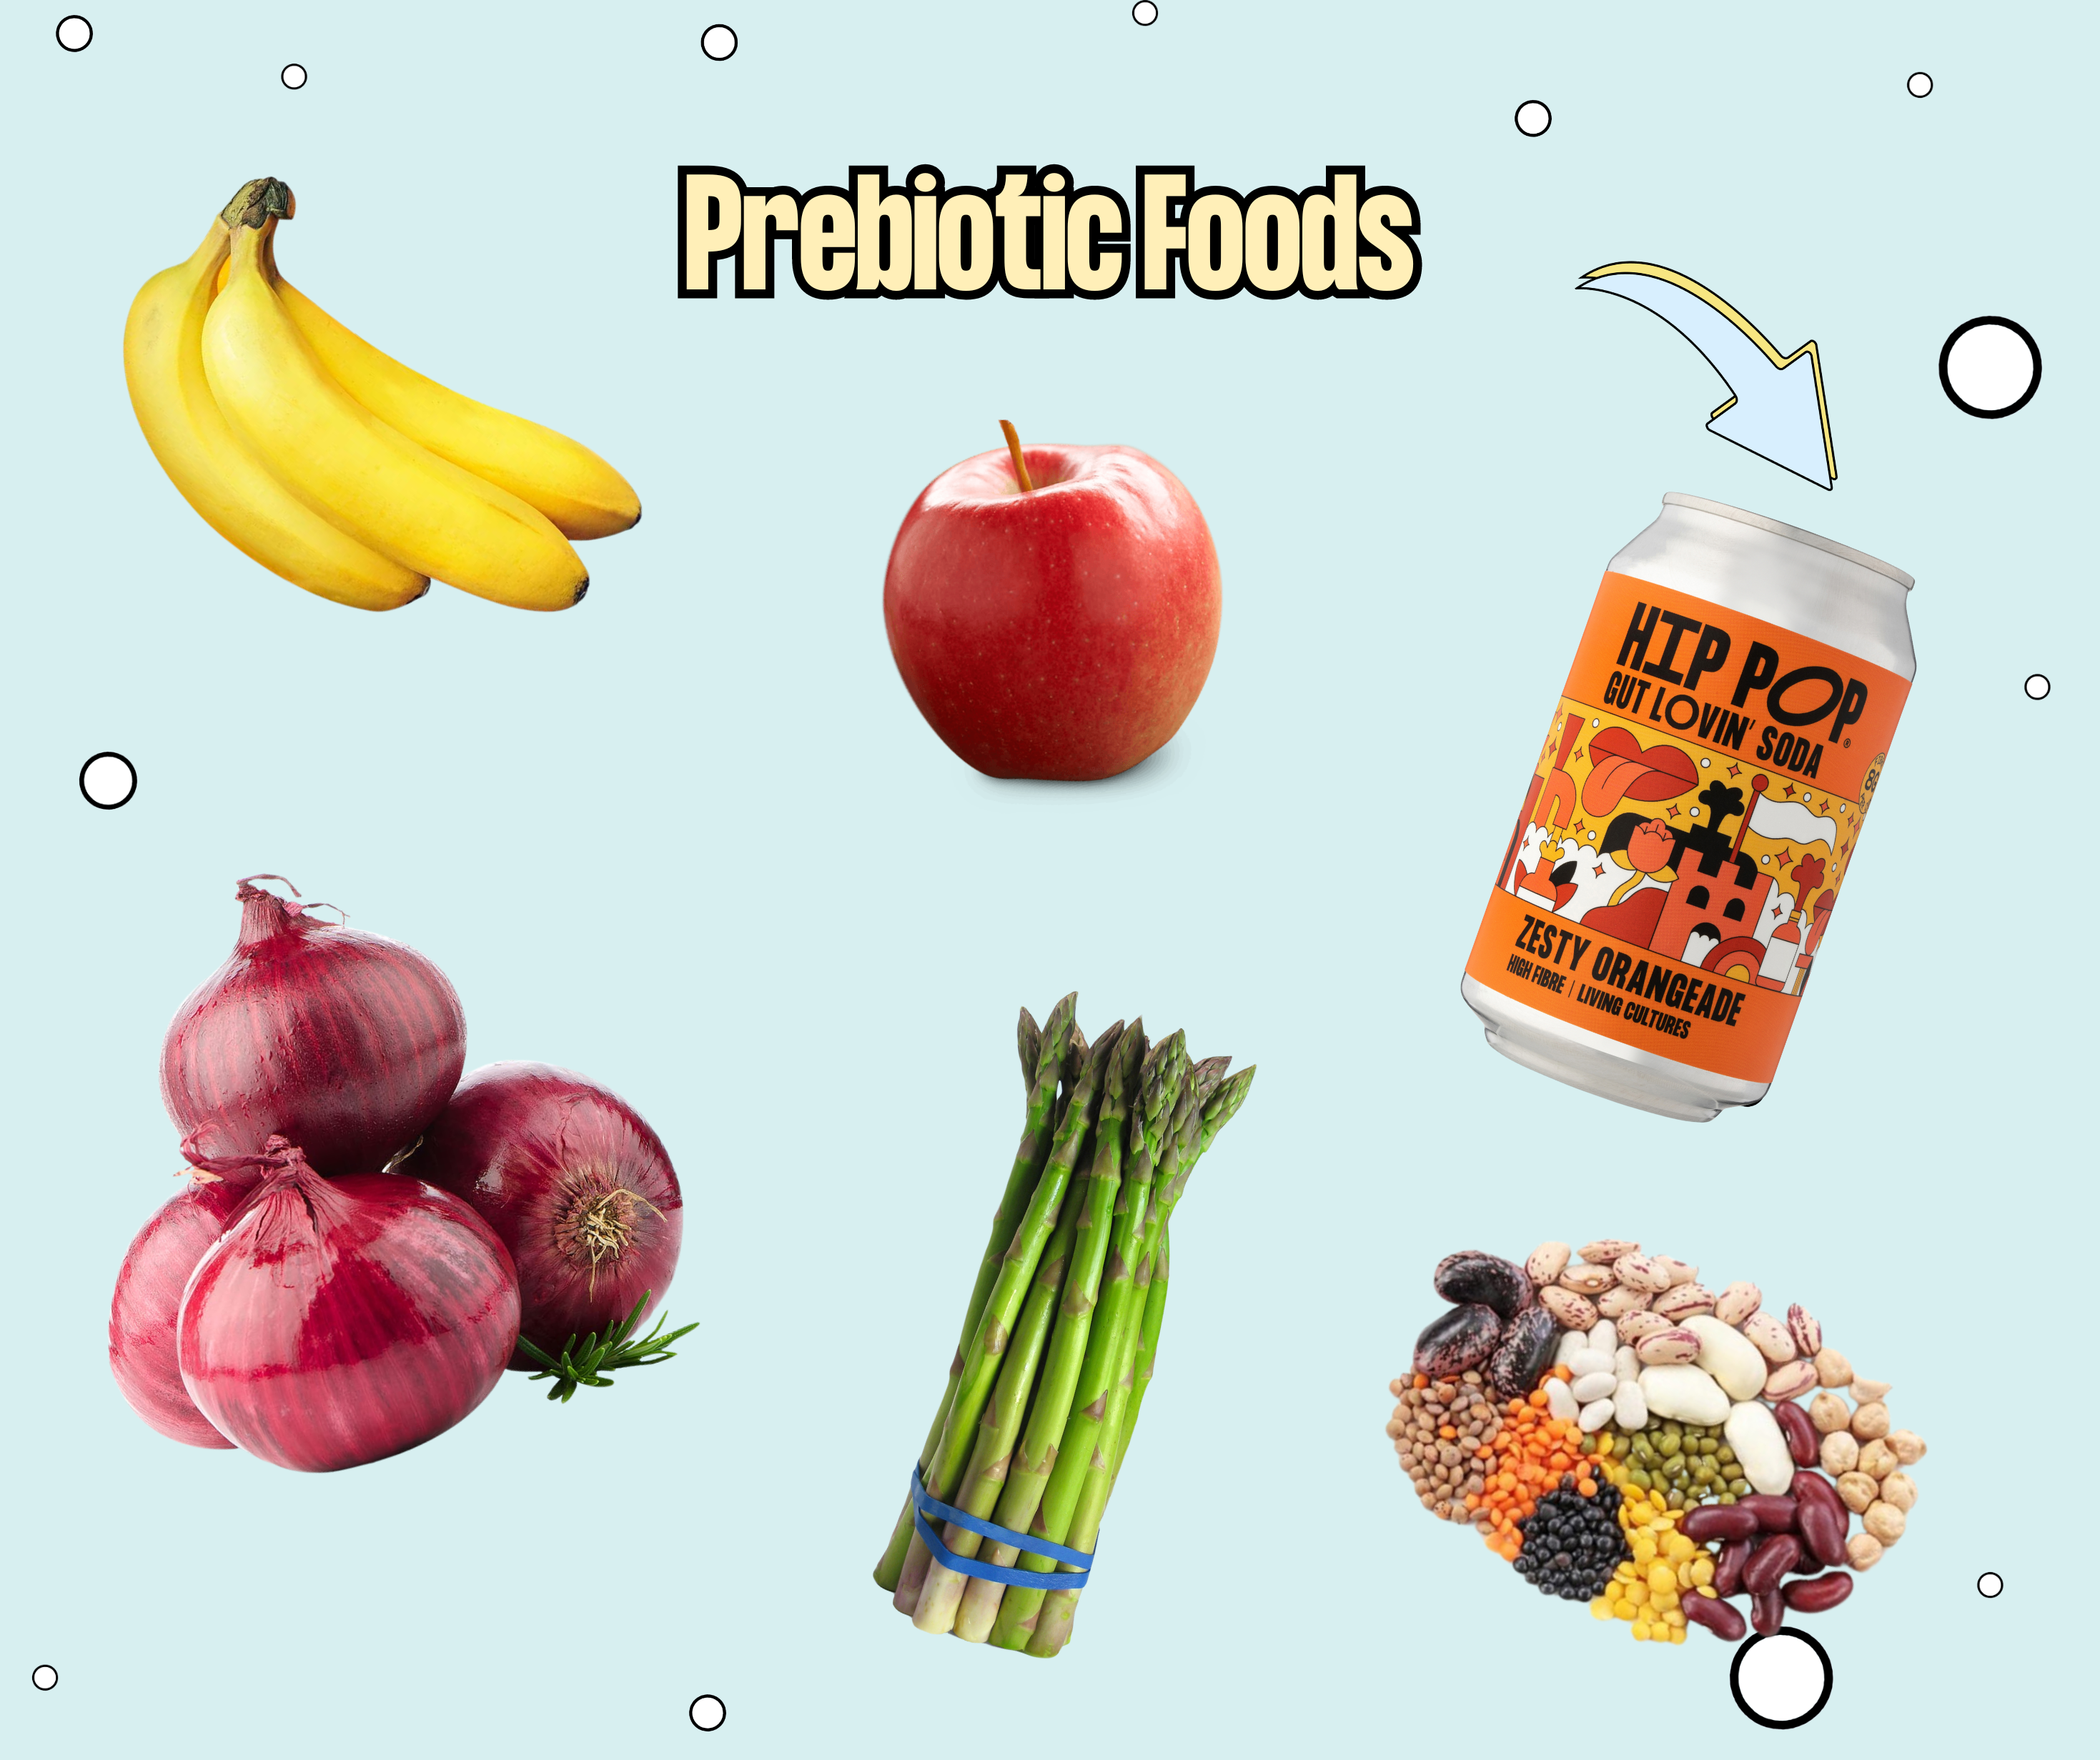 Prebiotic Foods